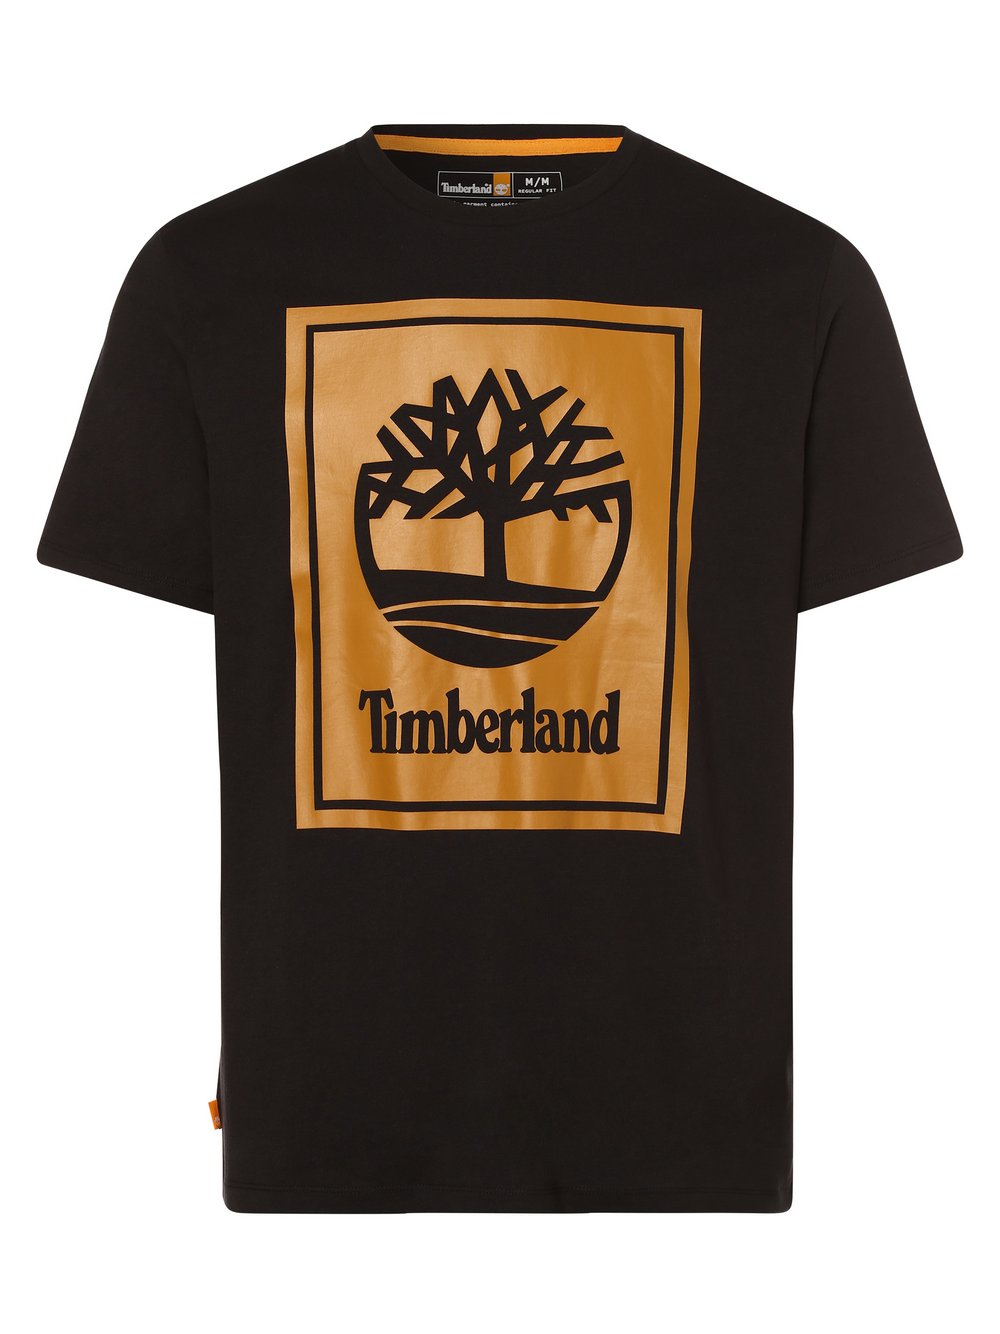 Timberland - T-shirt męski, czarny